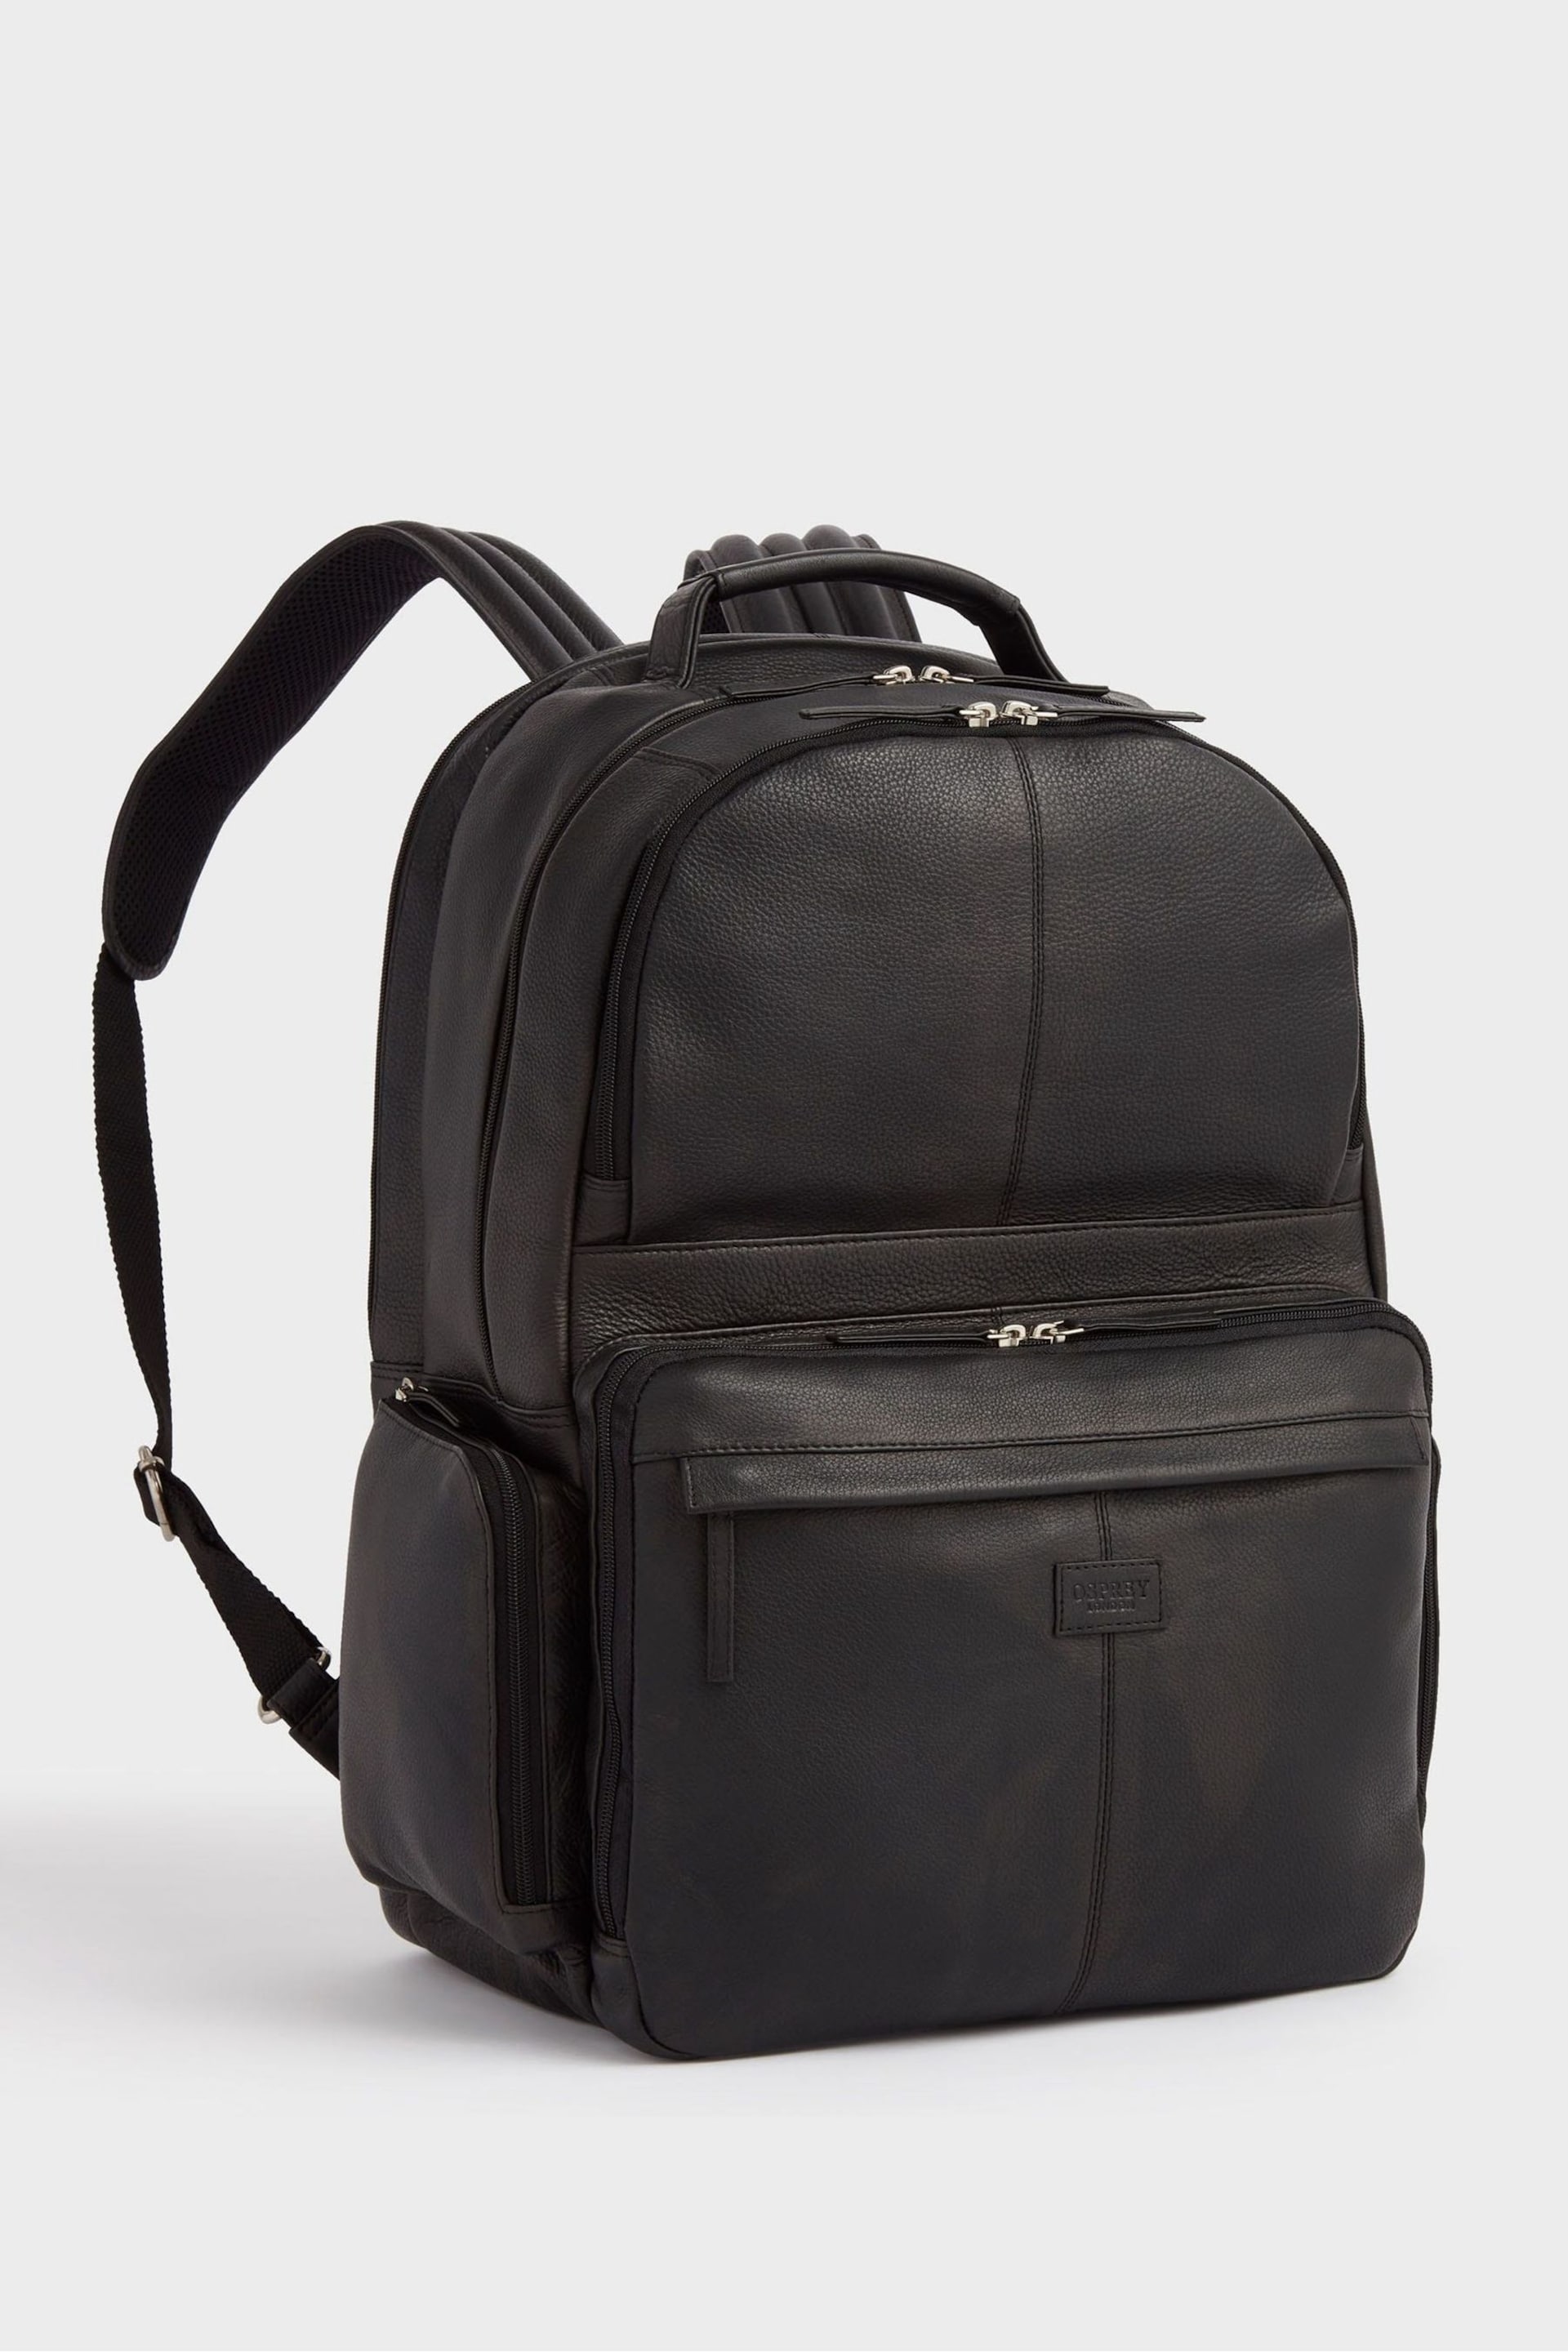 OSPREY LONDON The Lockton Black Leather Backpack - Image 3 of 4